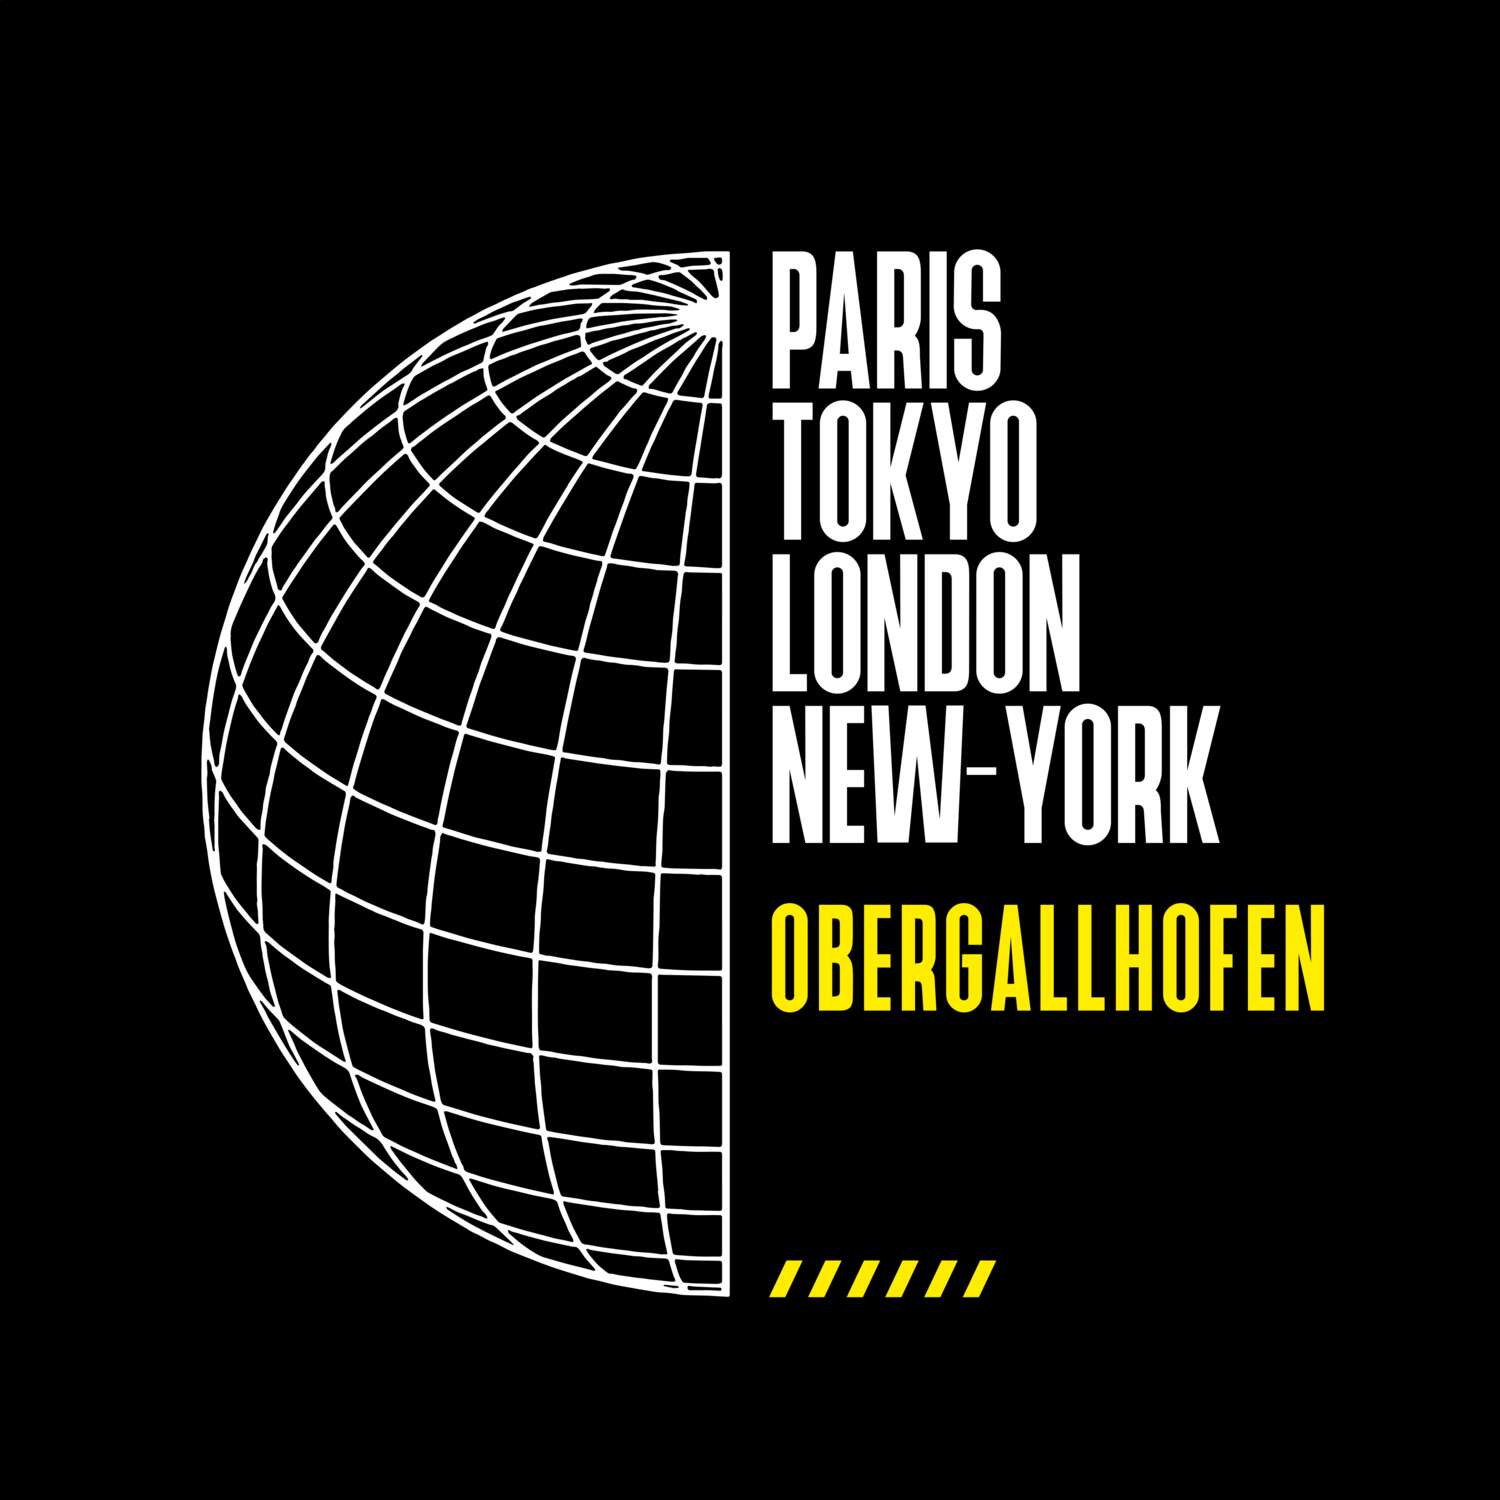 Obergallhofen T-Shirt »Paris Tokyo London«